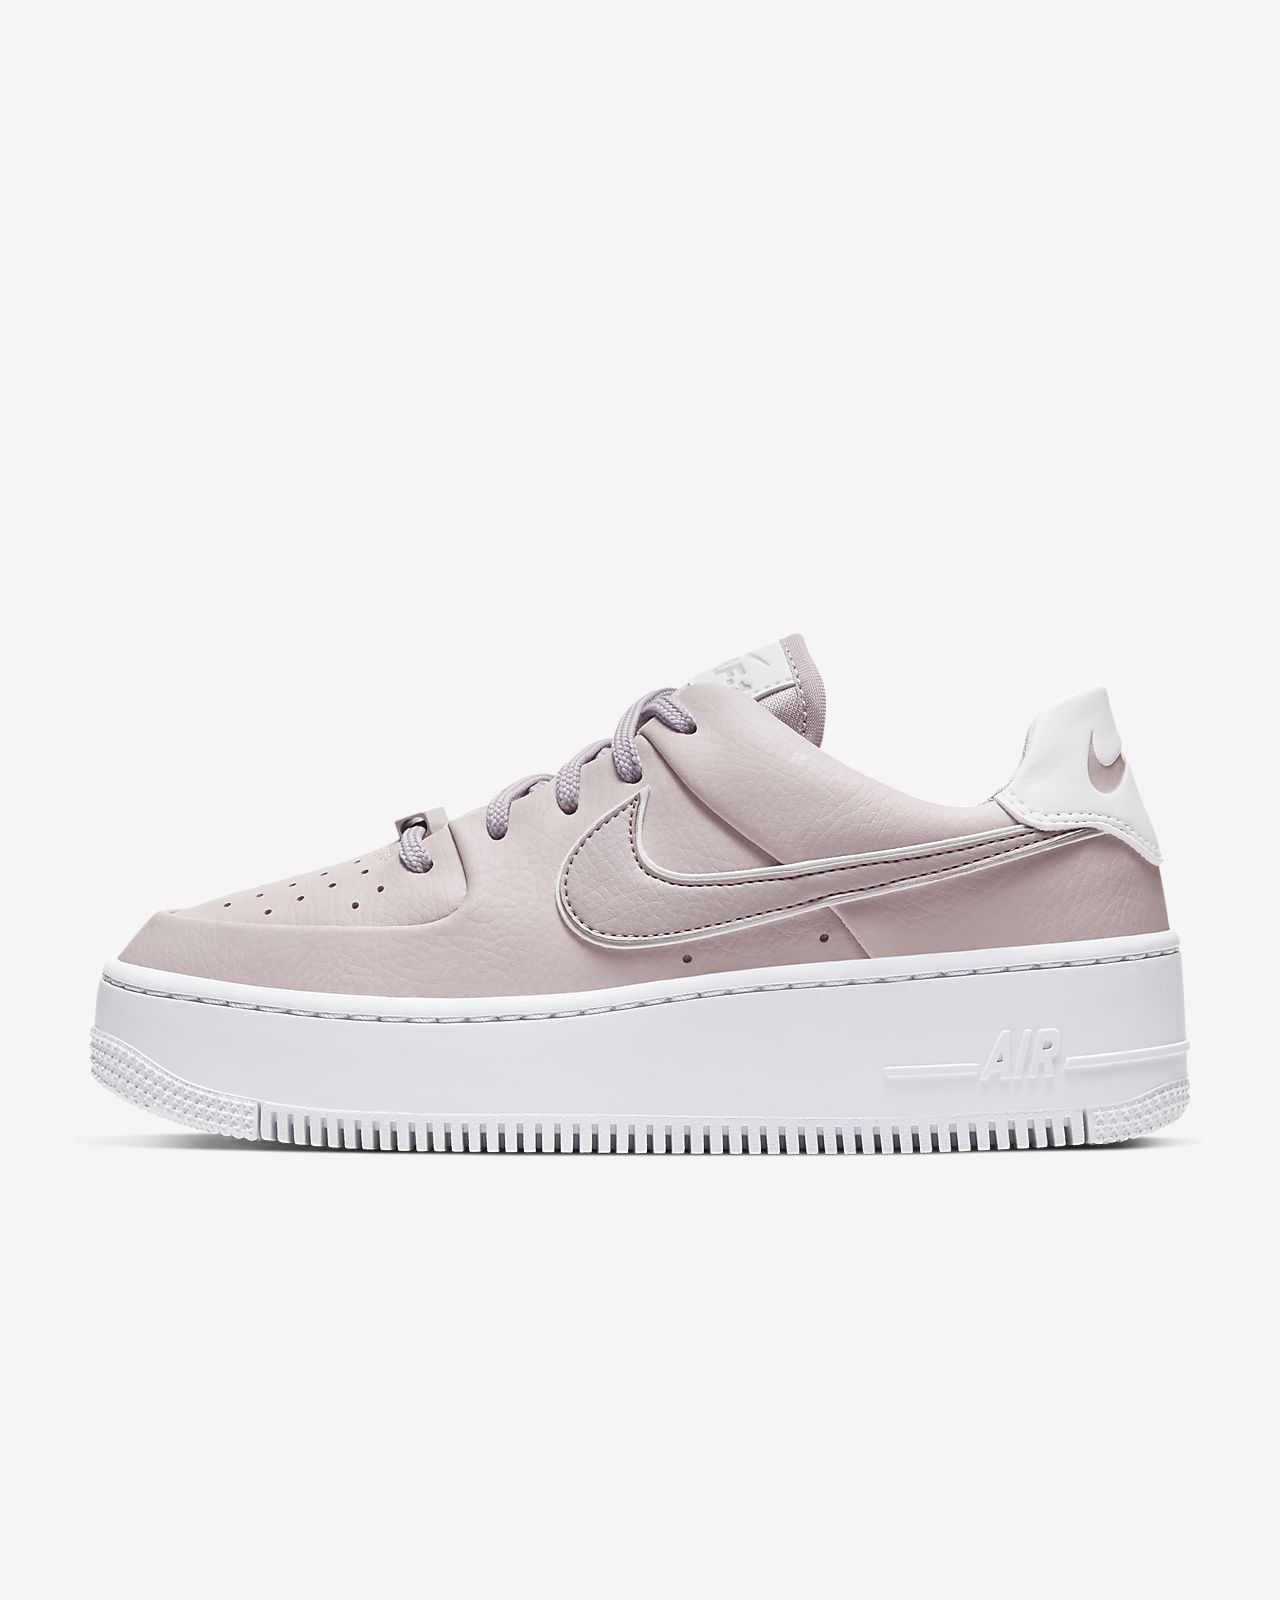 nike air force 1 sage low women's shoe white